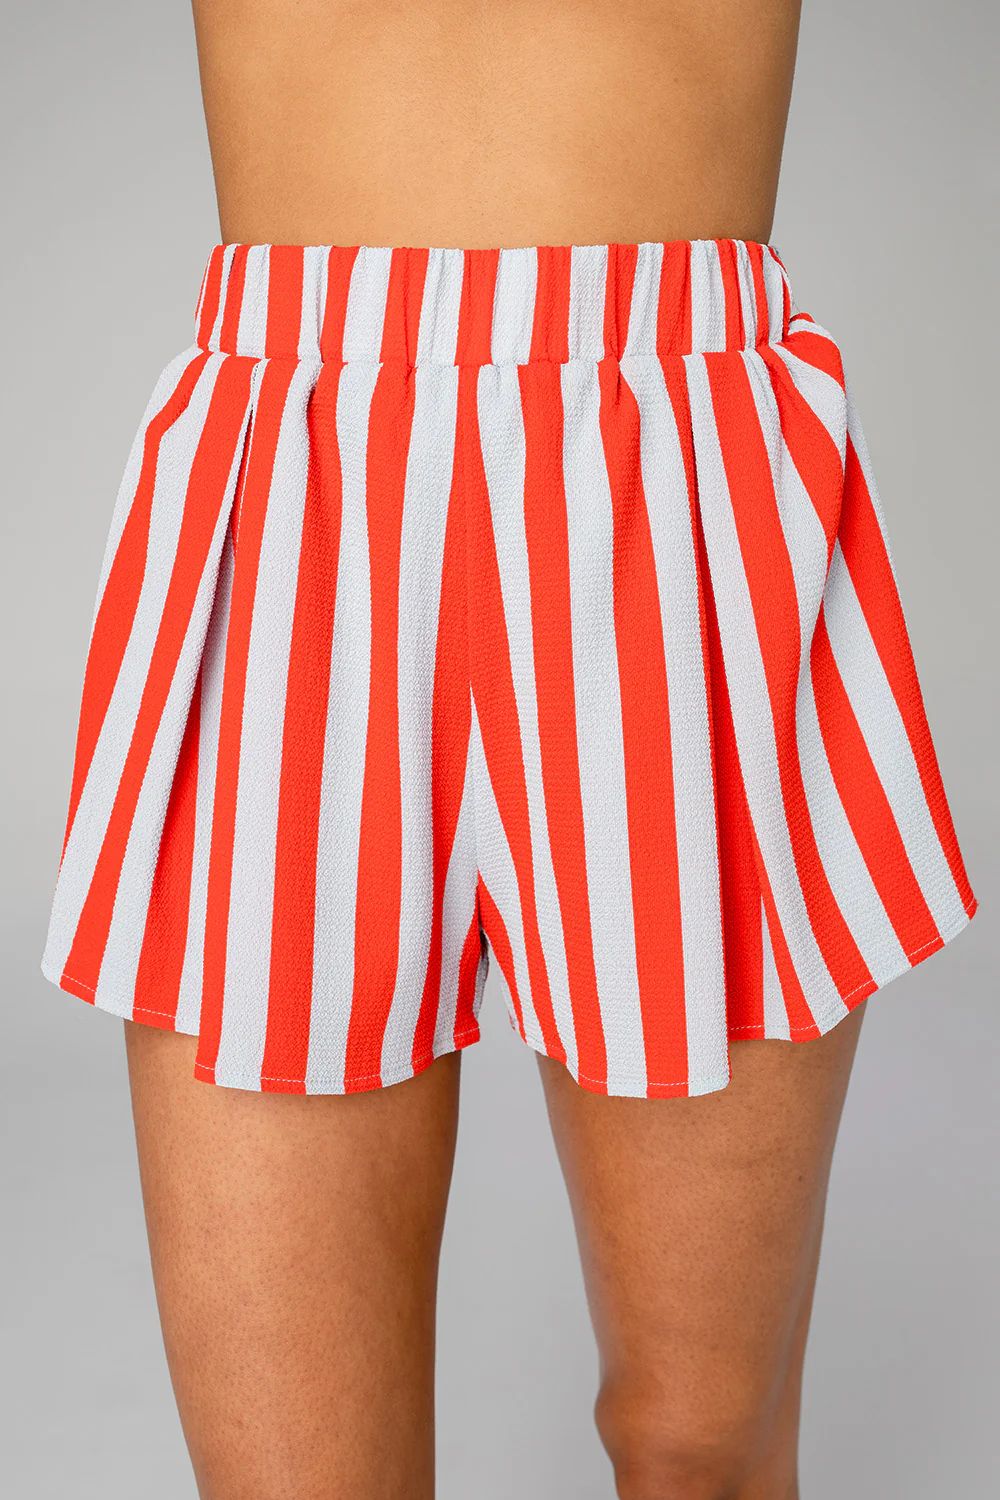 Shirley Elastic High-Waisted Shorts - Nautical | BuddyLove